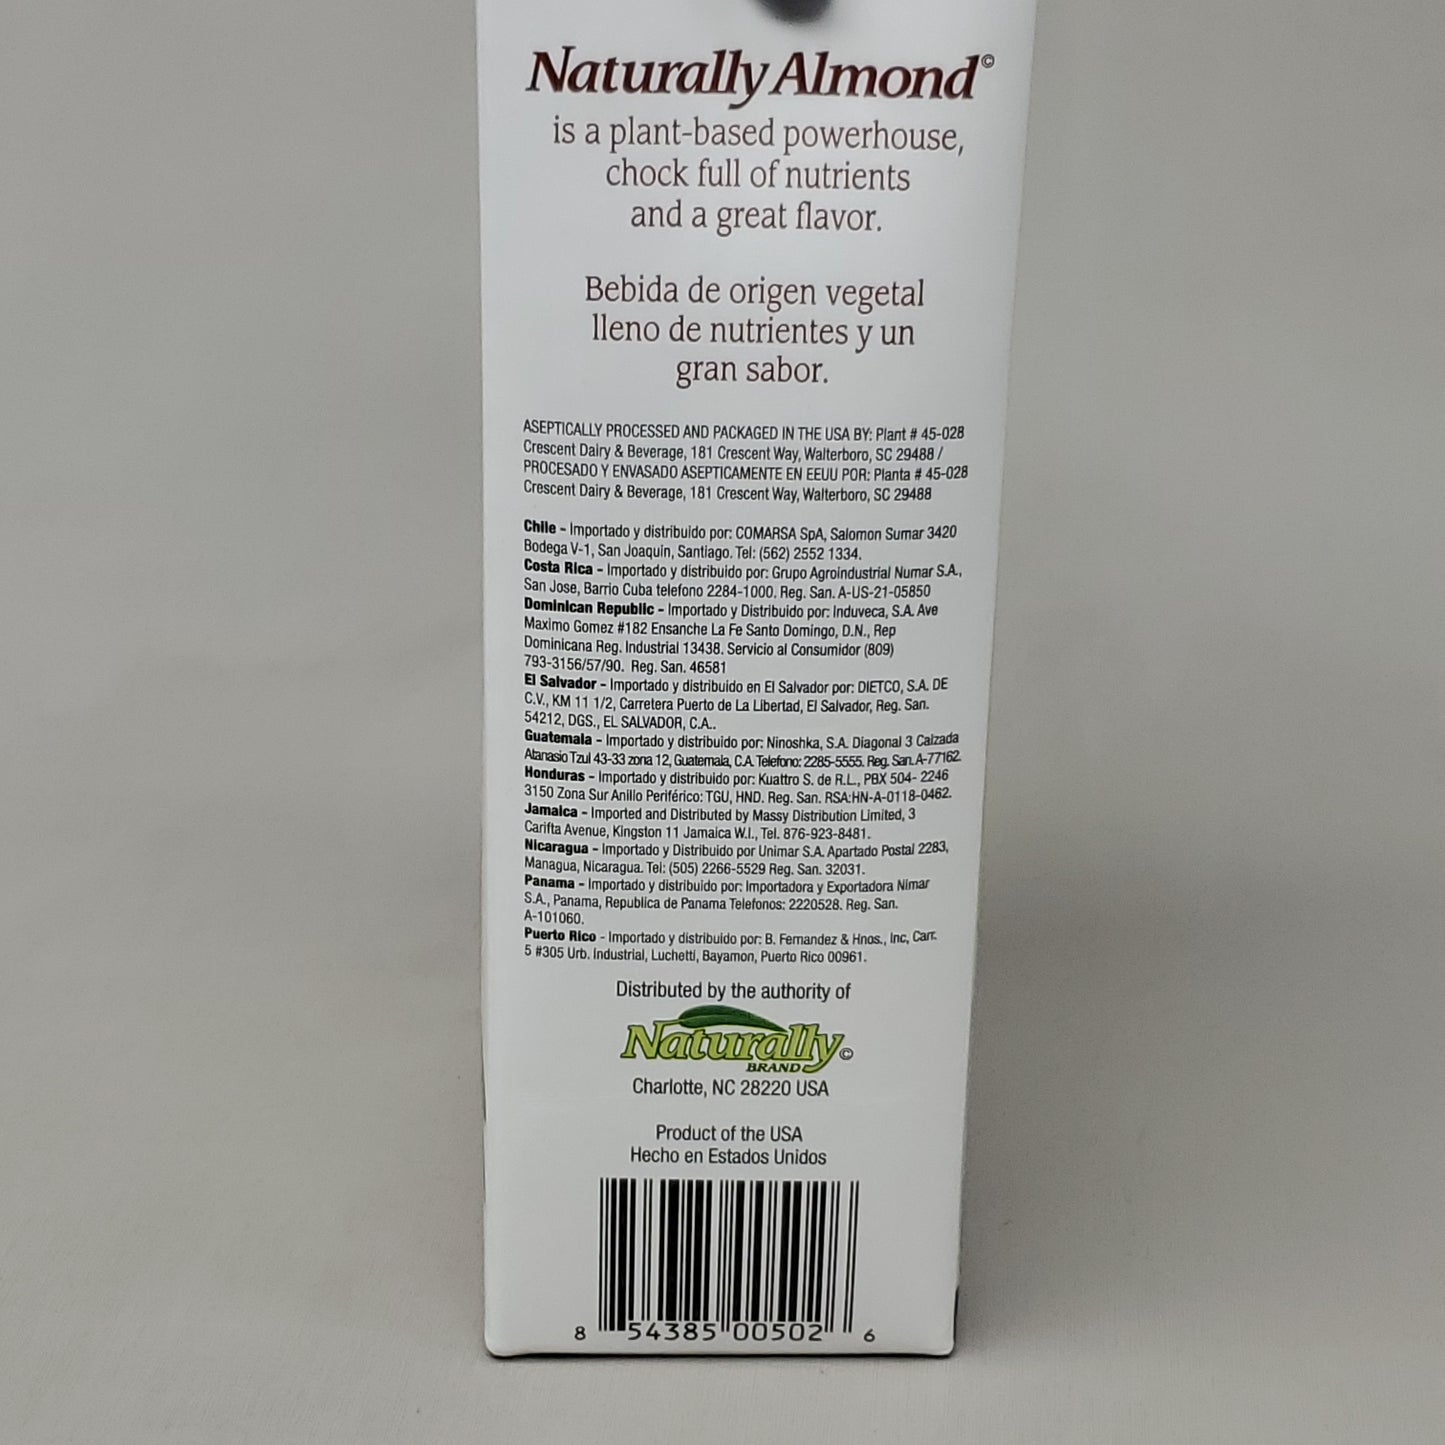 ZA@ NATURALLY ALMOND Case of 12 Unsweetened Original Almond Milk 32 fl oz (BB 11/23)